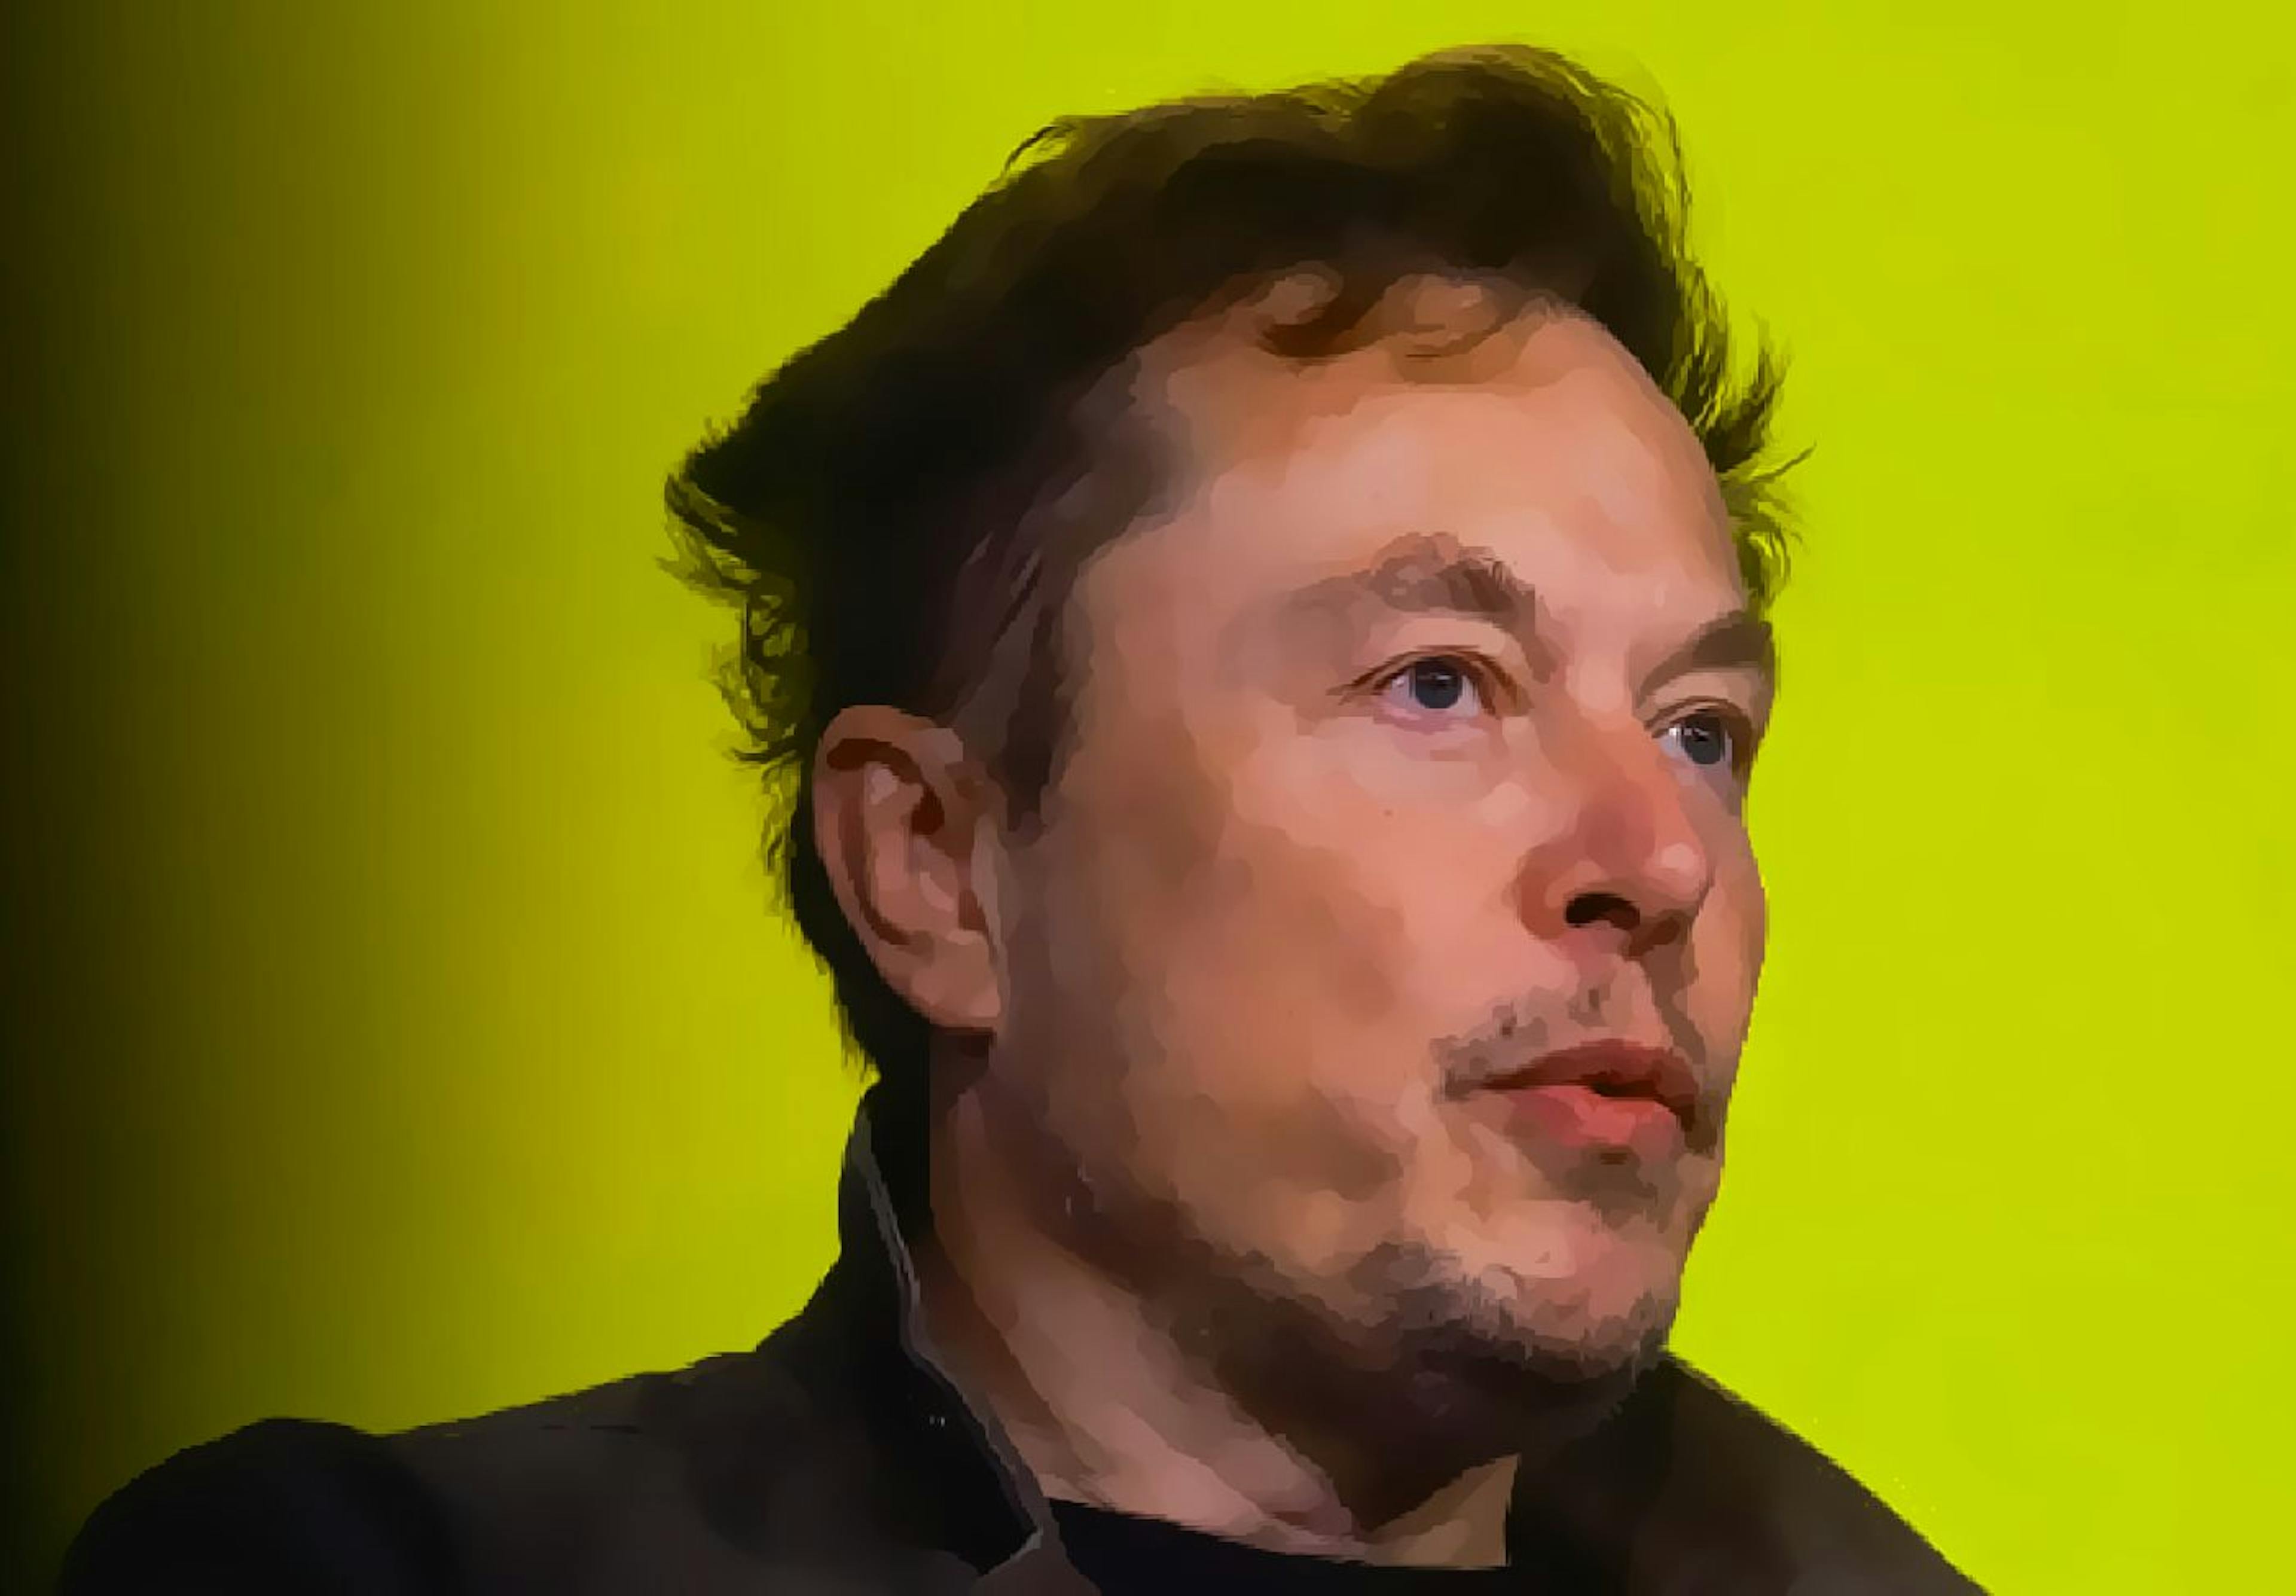 Elon pensive